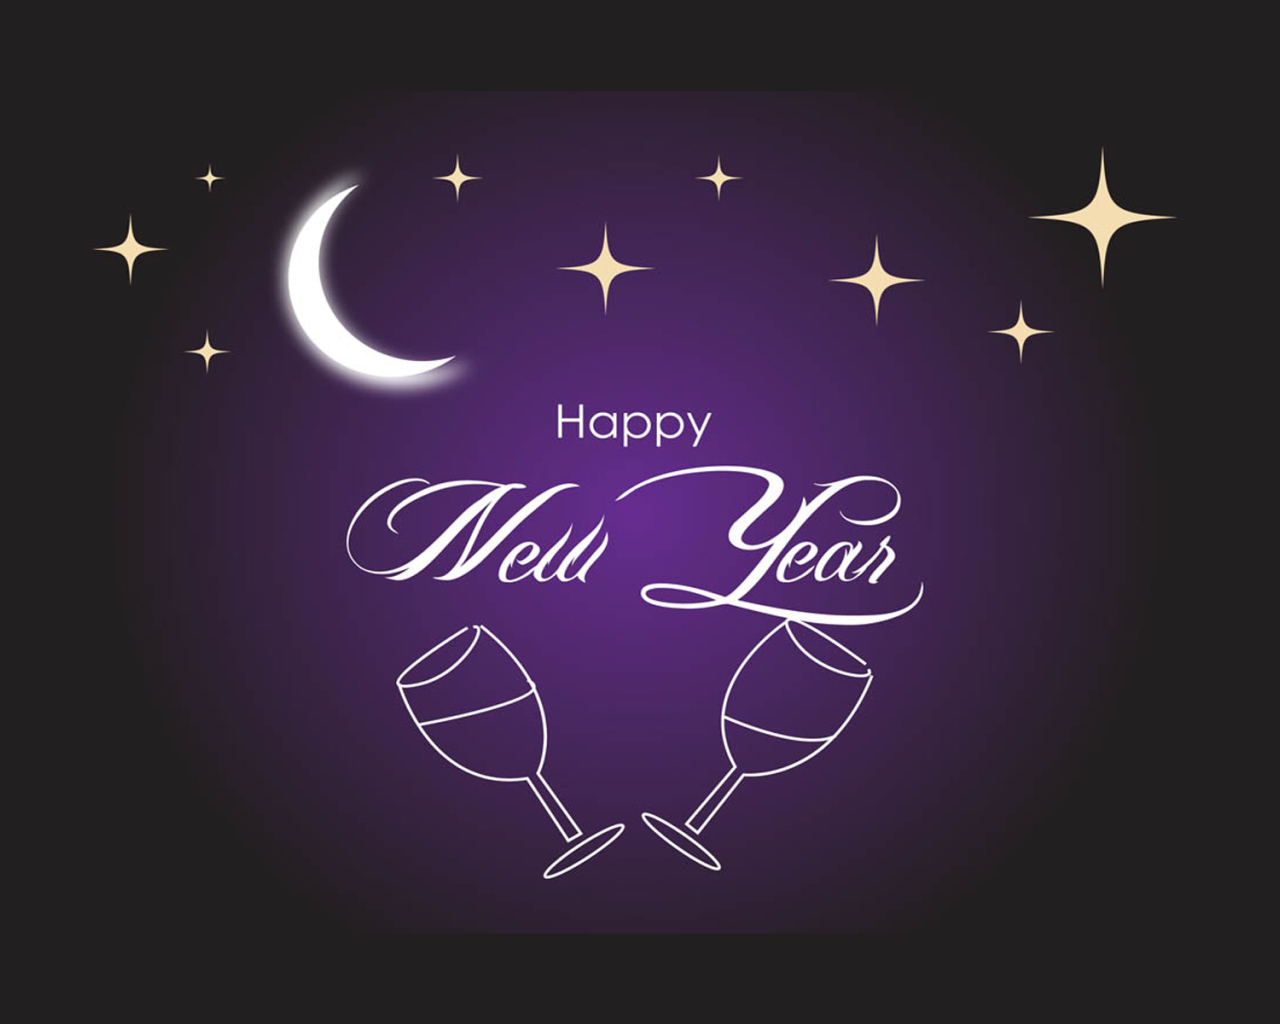 Happy New Year, purple background